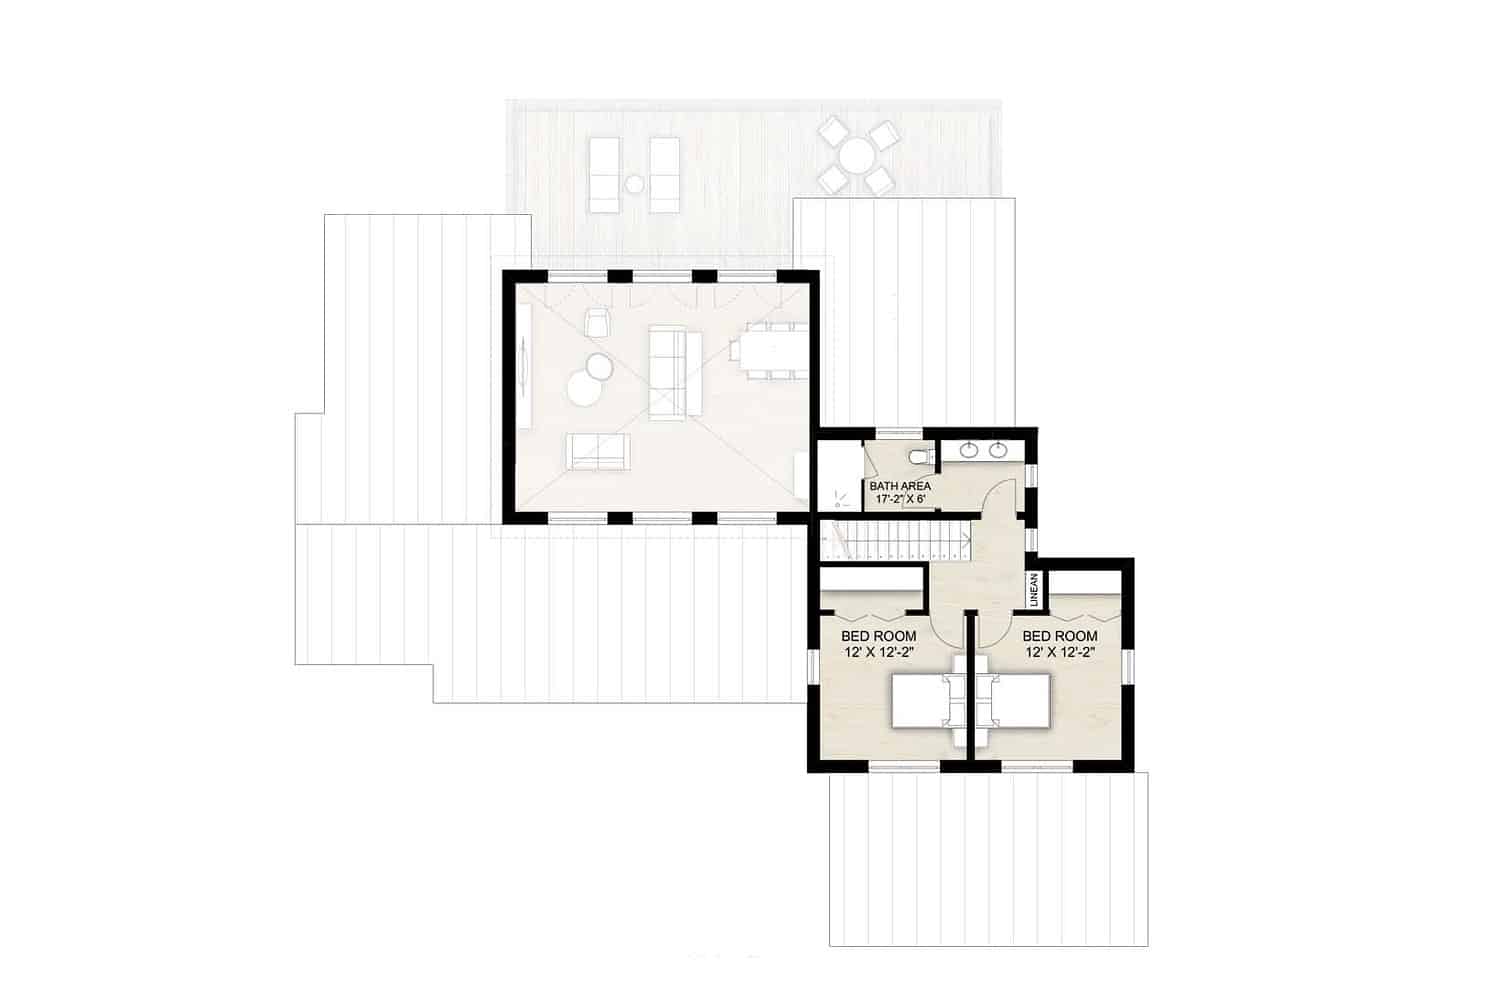 Truoba 118 - 3 bedroom house second floor plan